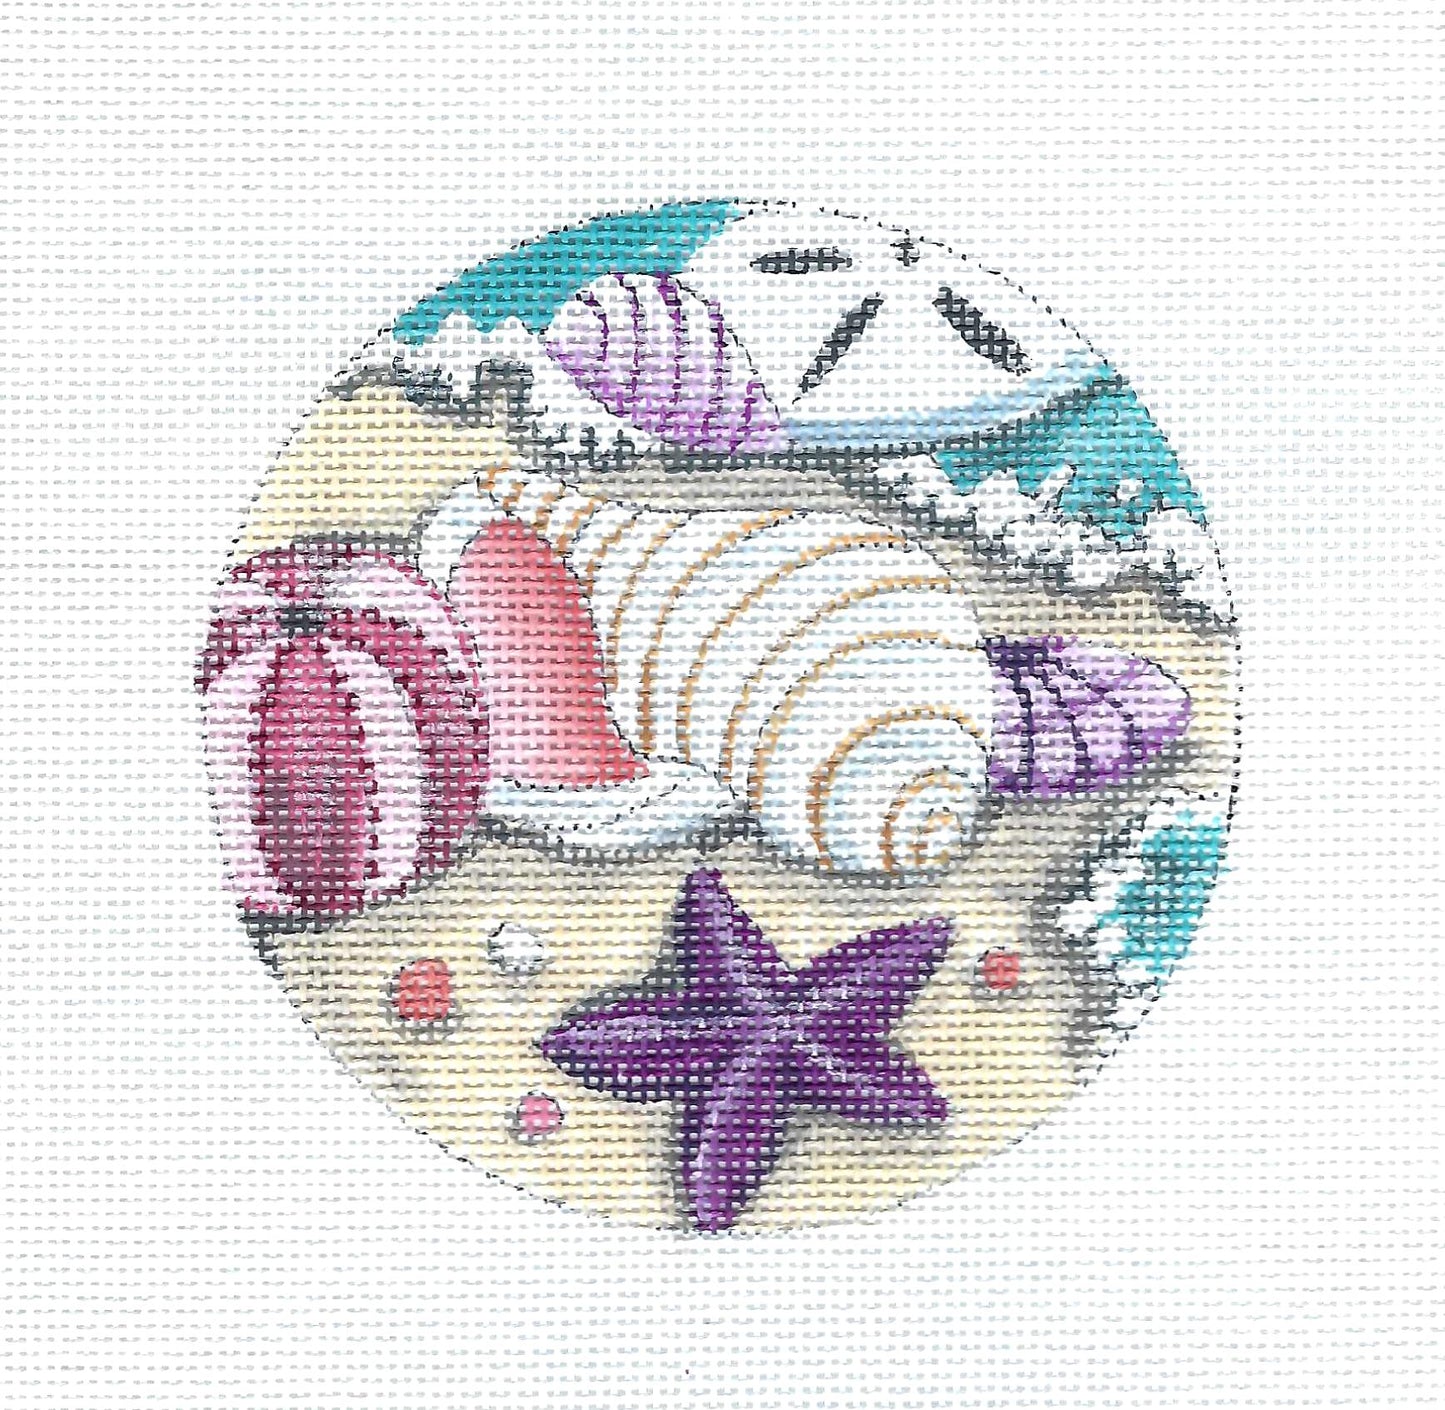 Seashells Canvas ~ Seashells & Starfish on the Beach handpainted 18 mesh Needlepoint Canvas by Alice Peterson